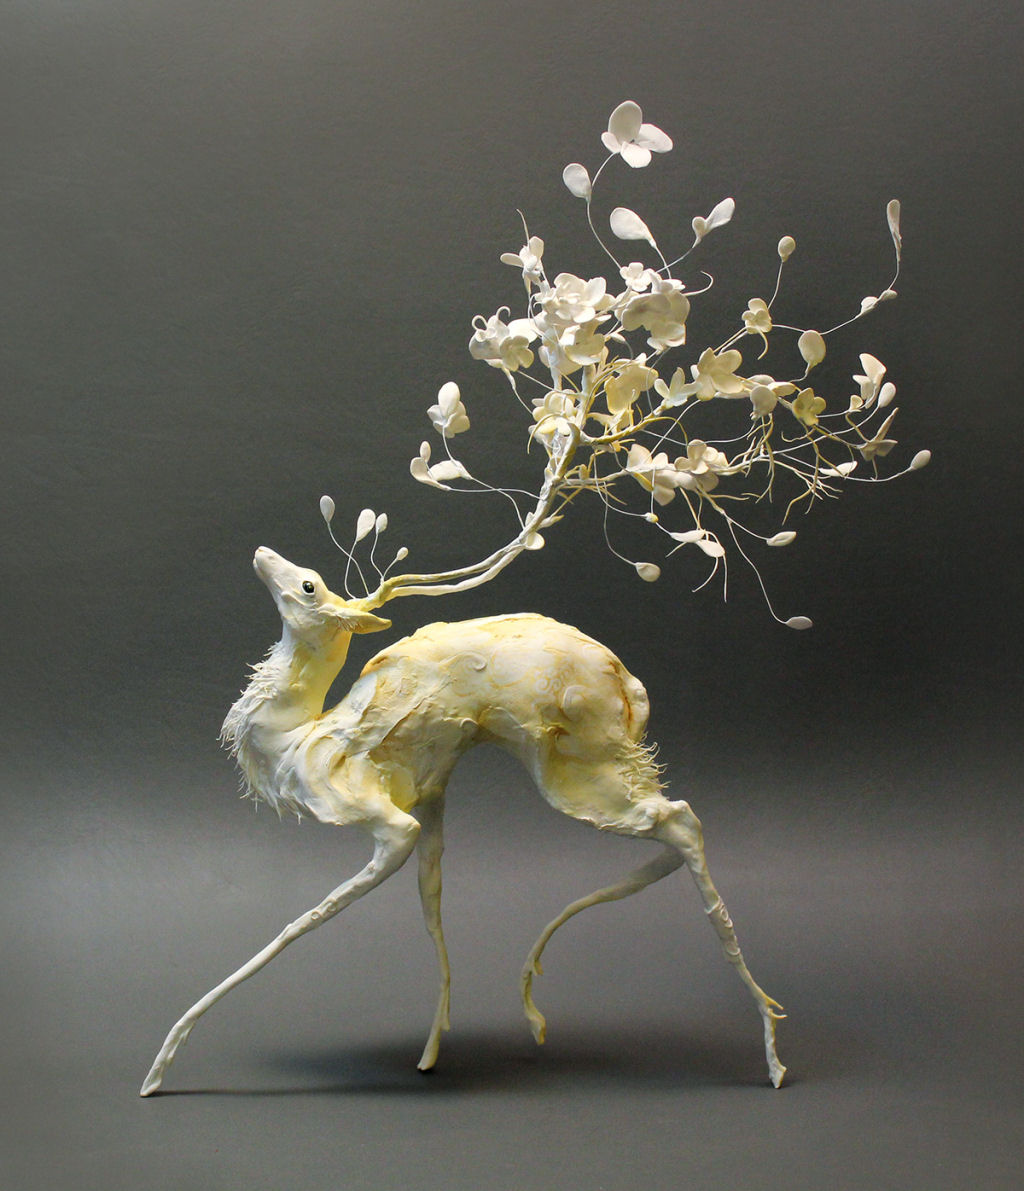 As esculturas surrealistas de Ellen Jewett mesclam plantas e vida animal 01